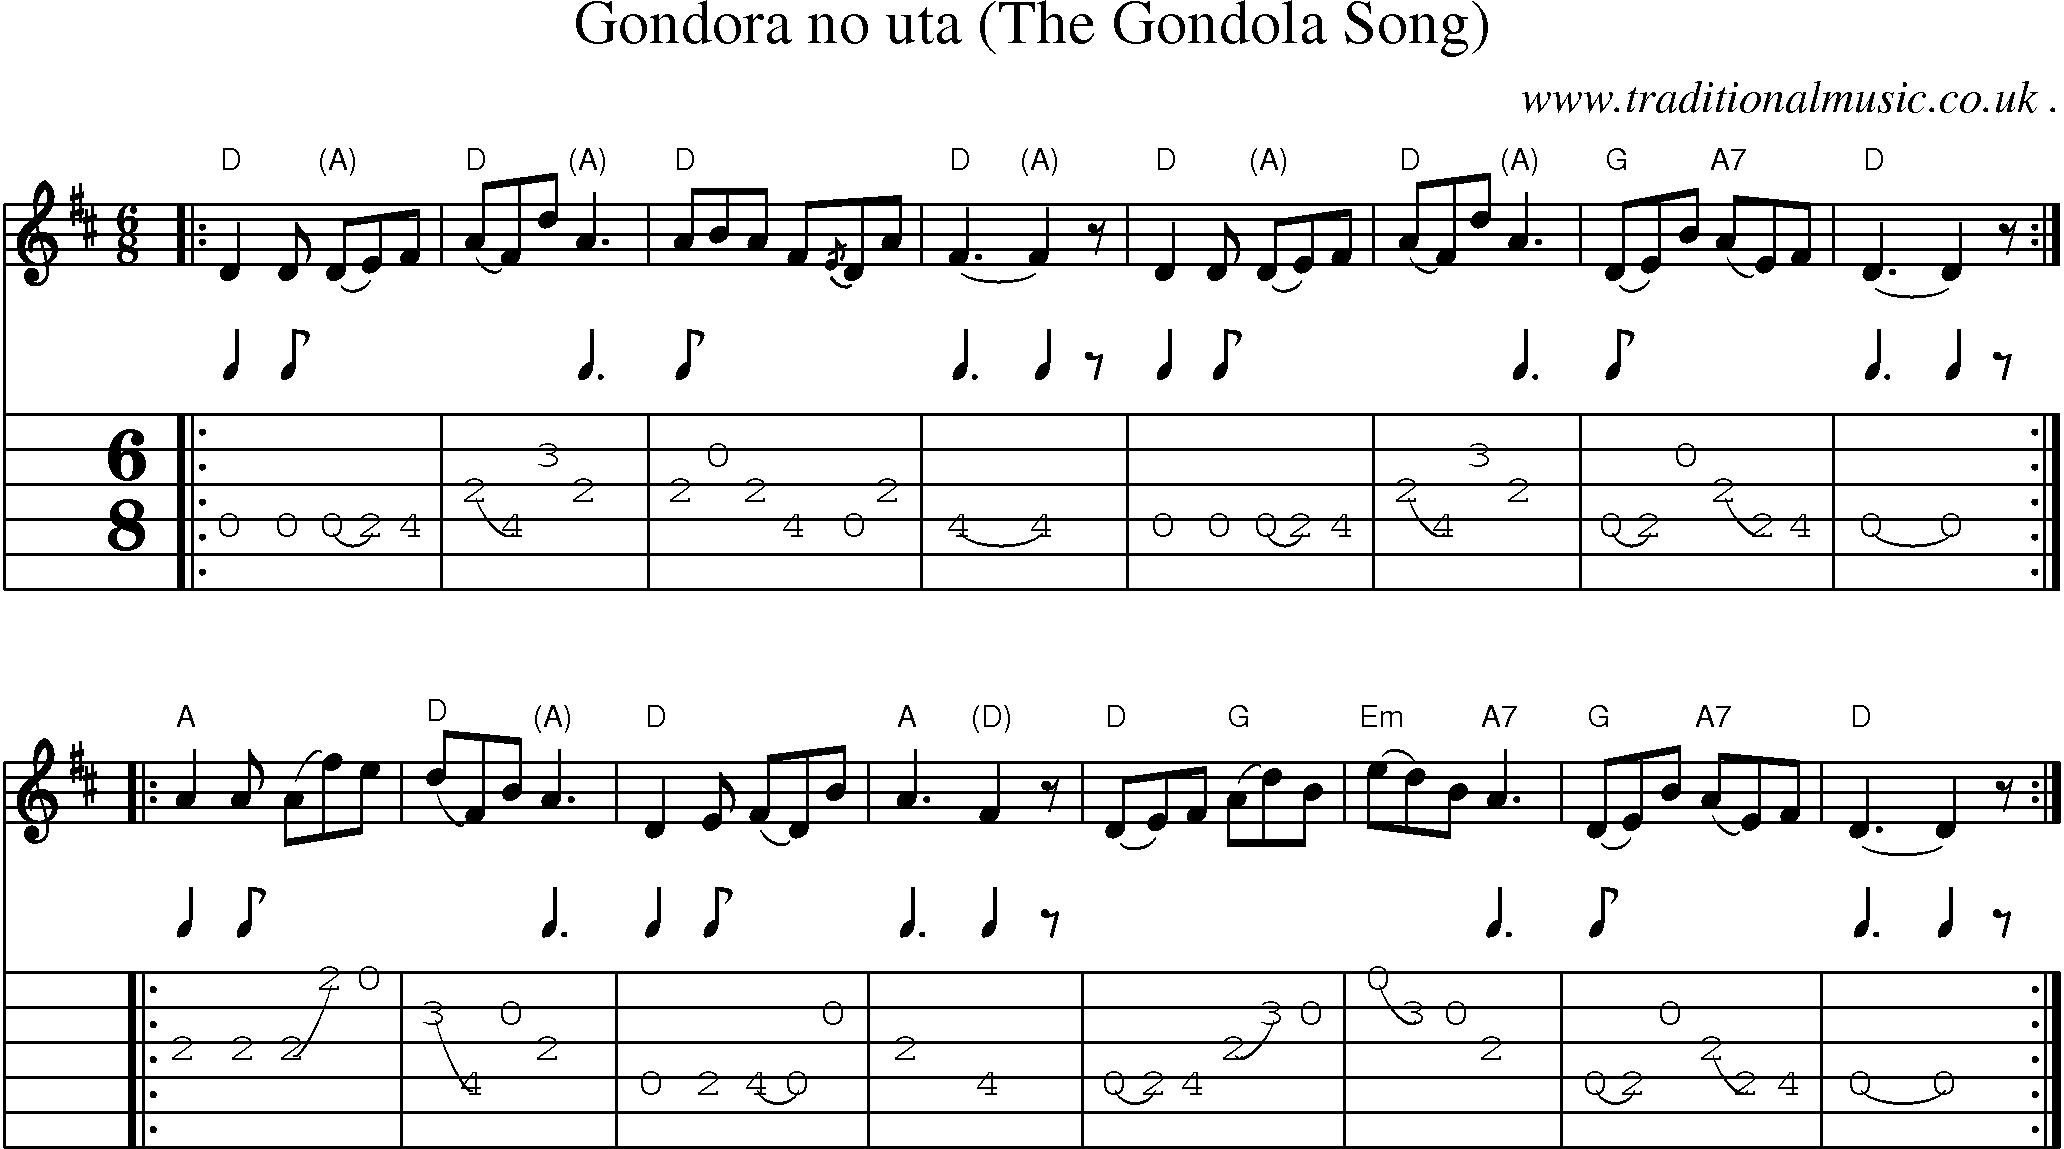 Sheet-music  score, Chords and Guitar Tabs for Gondora No Uta The Gondola Song